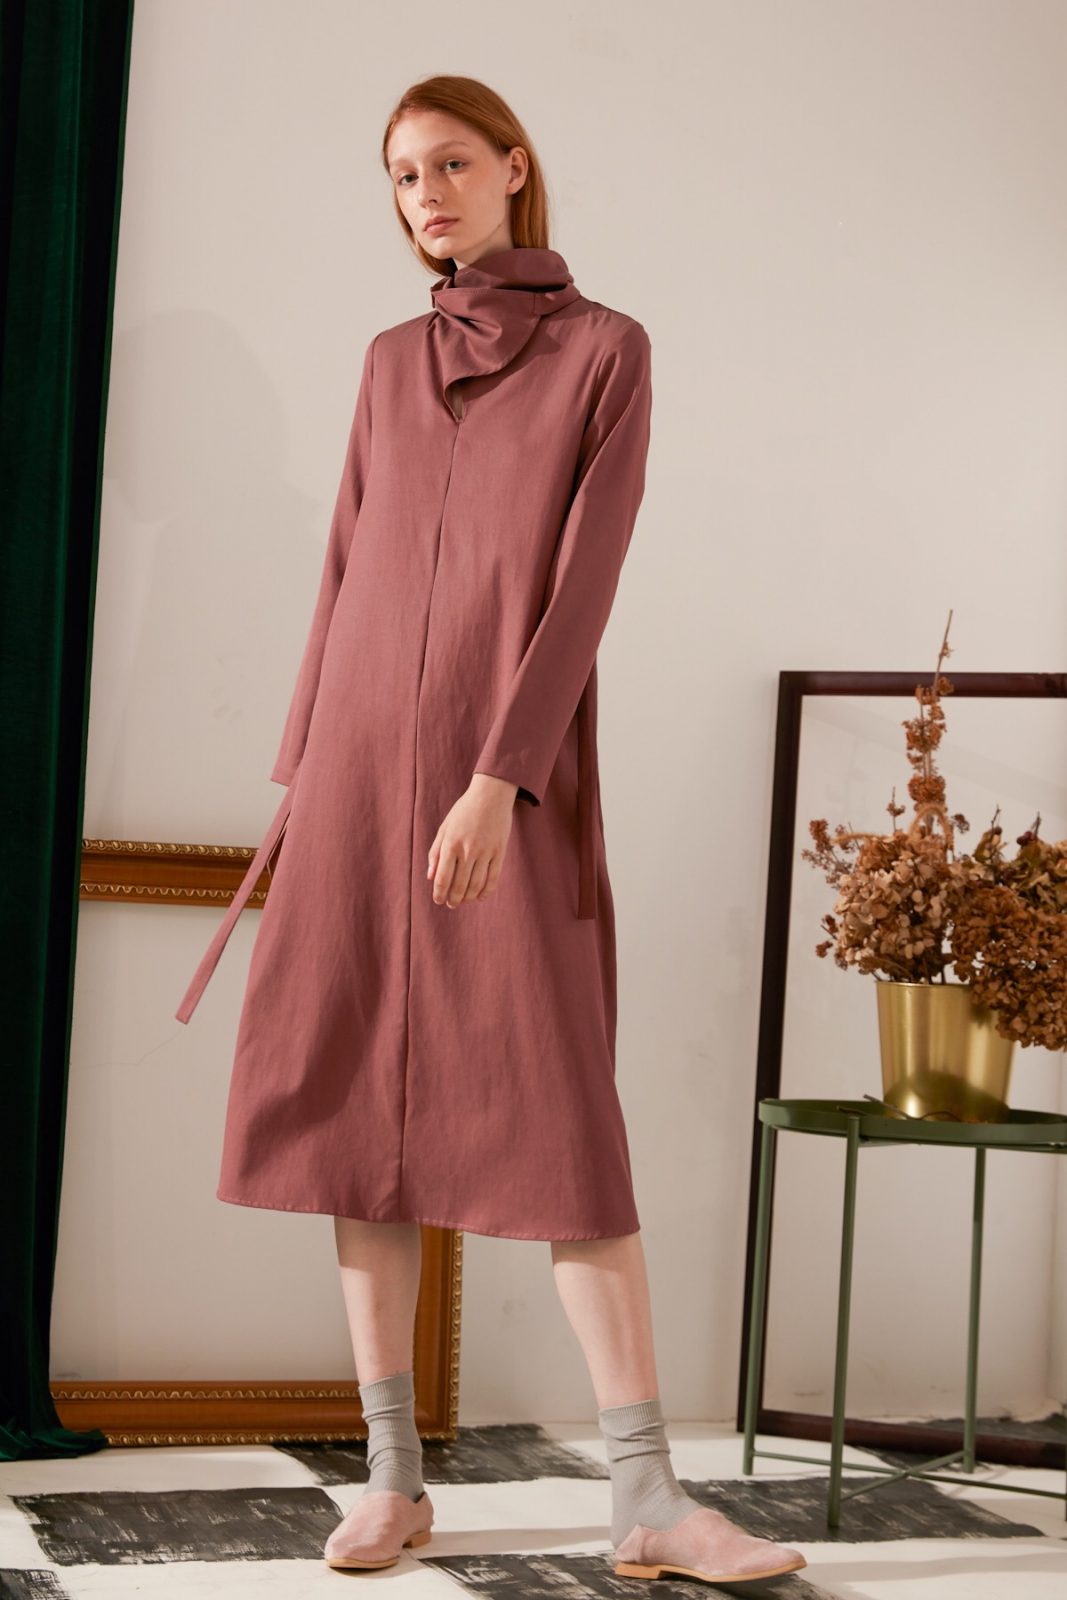 SKYE modern minimalist women fashion long sleeve asymmetrical high collar dress maroon 5